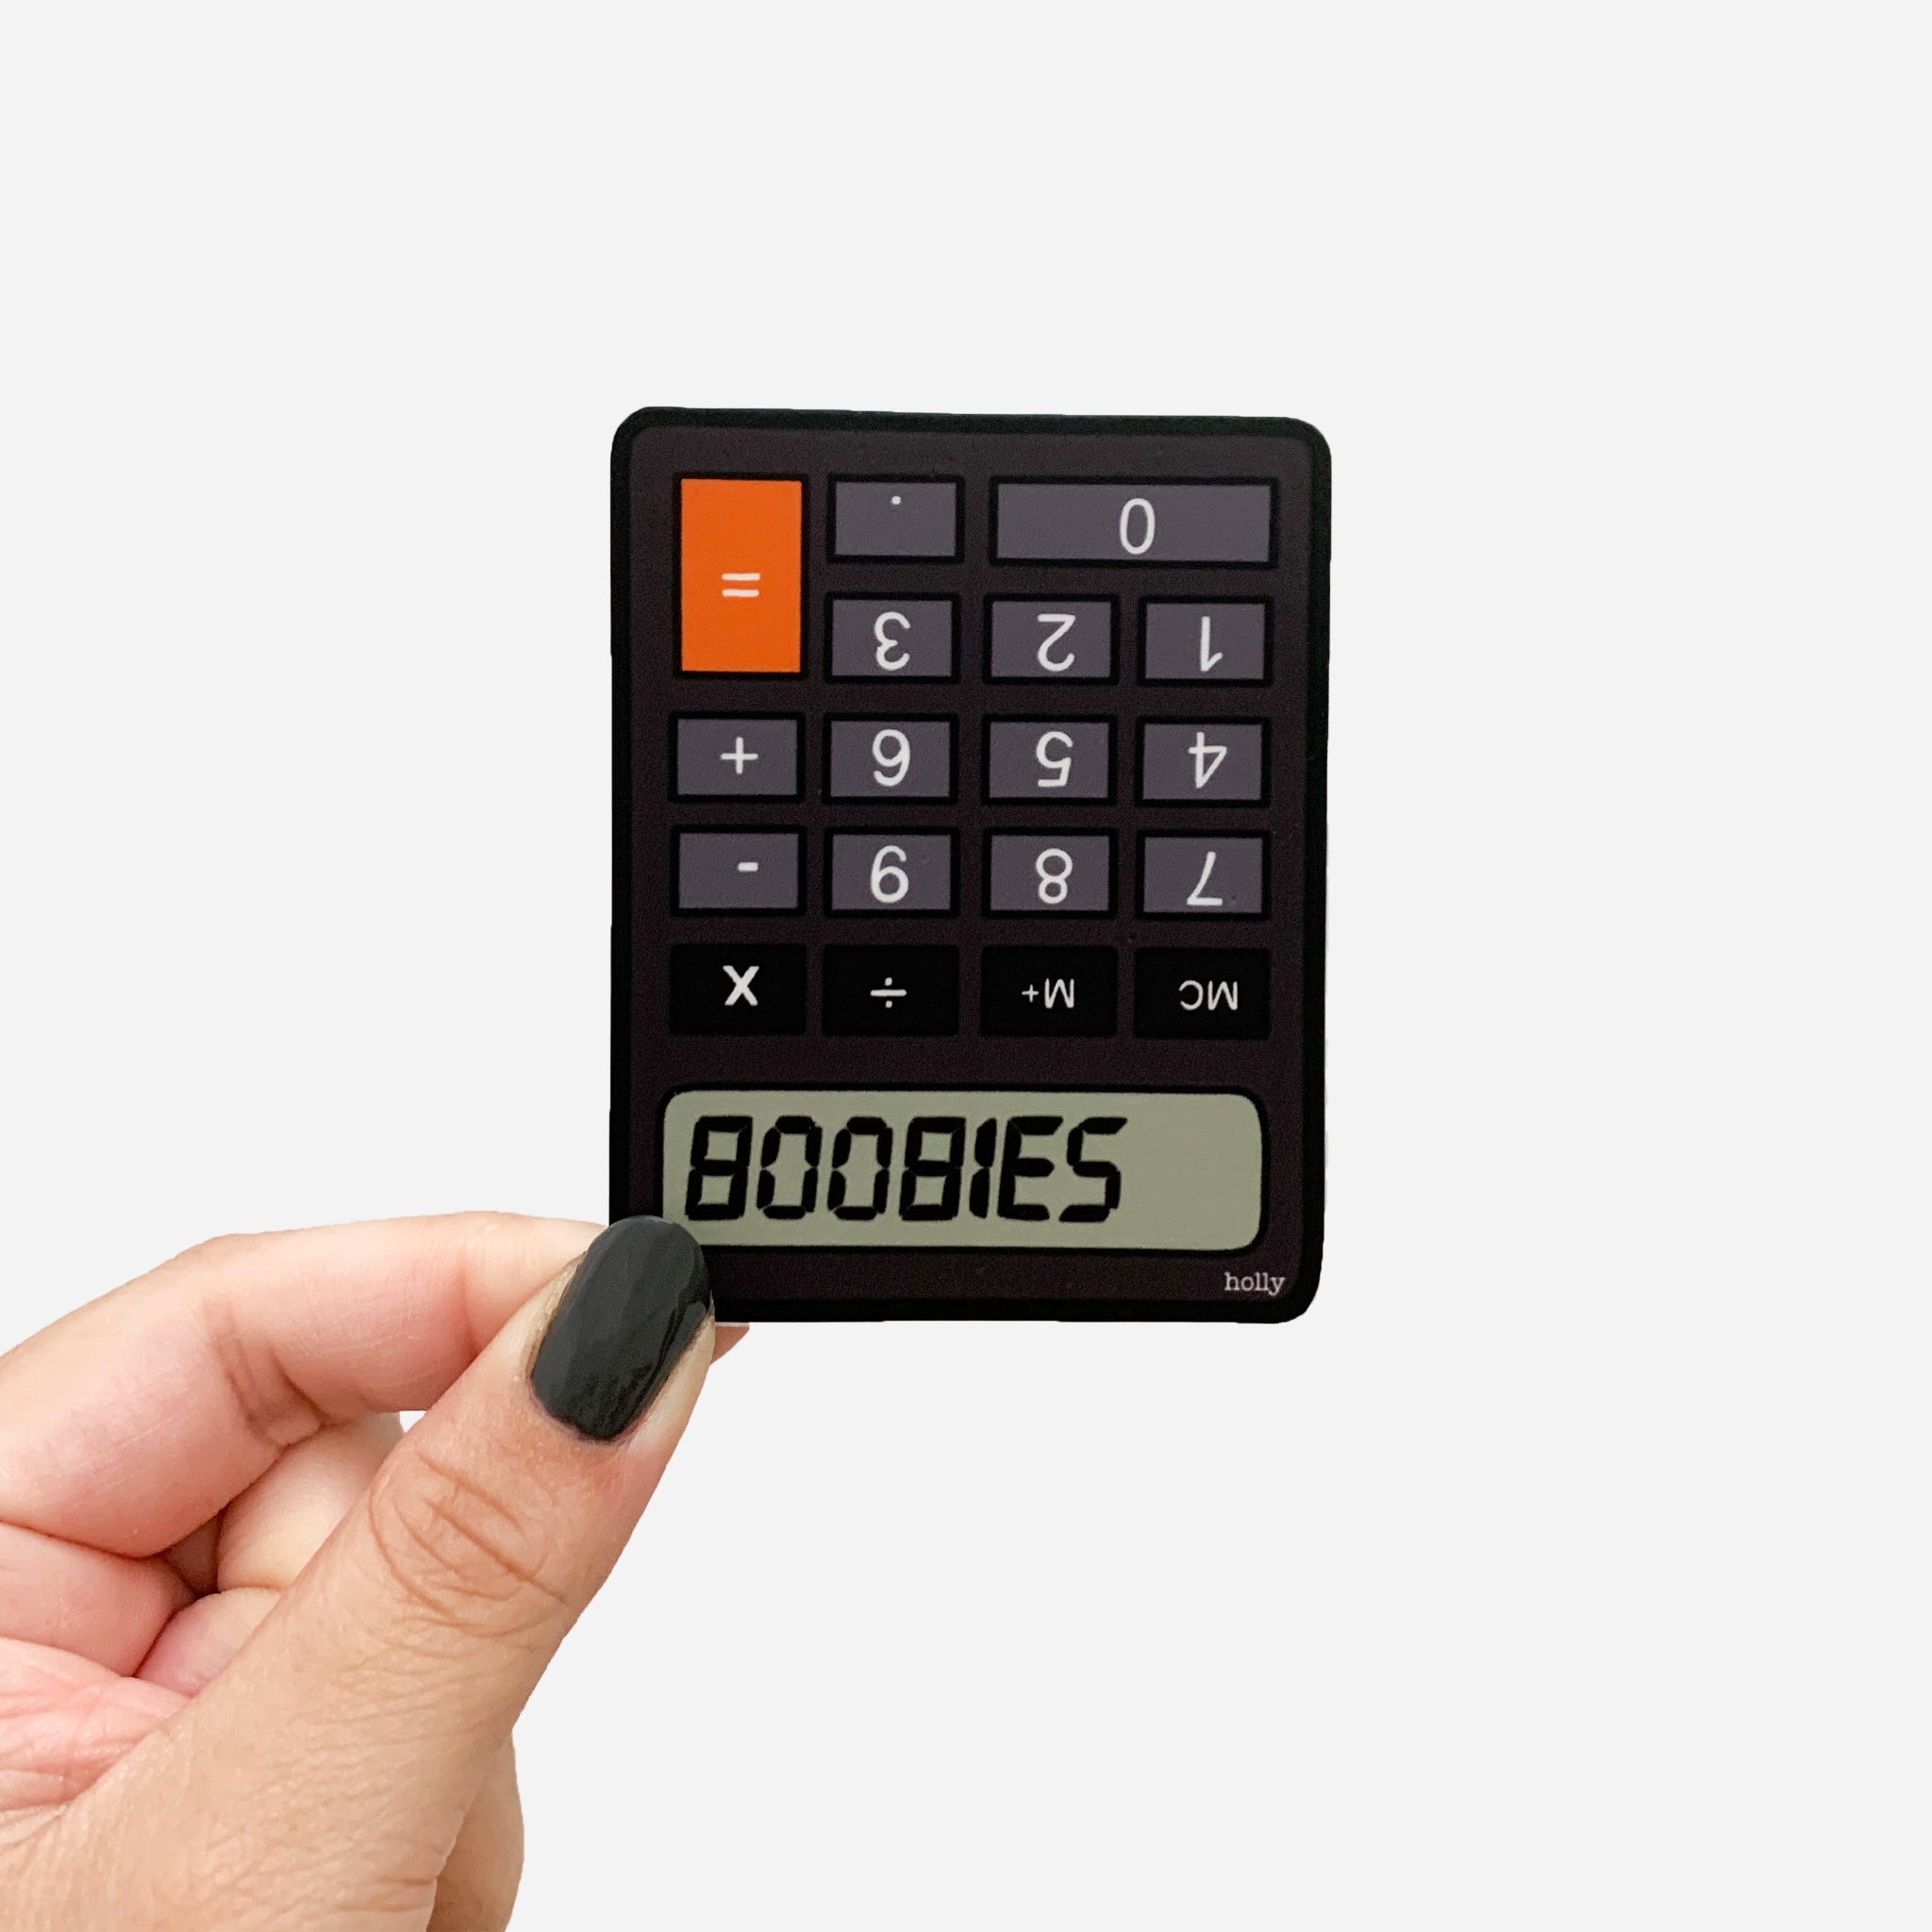 boobies calculator 3 vinyl sticker